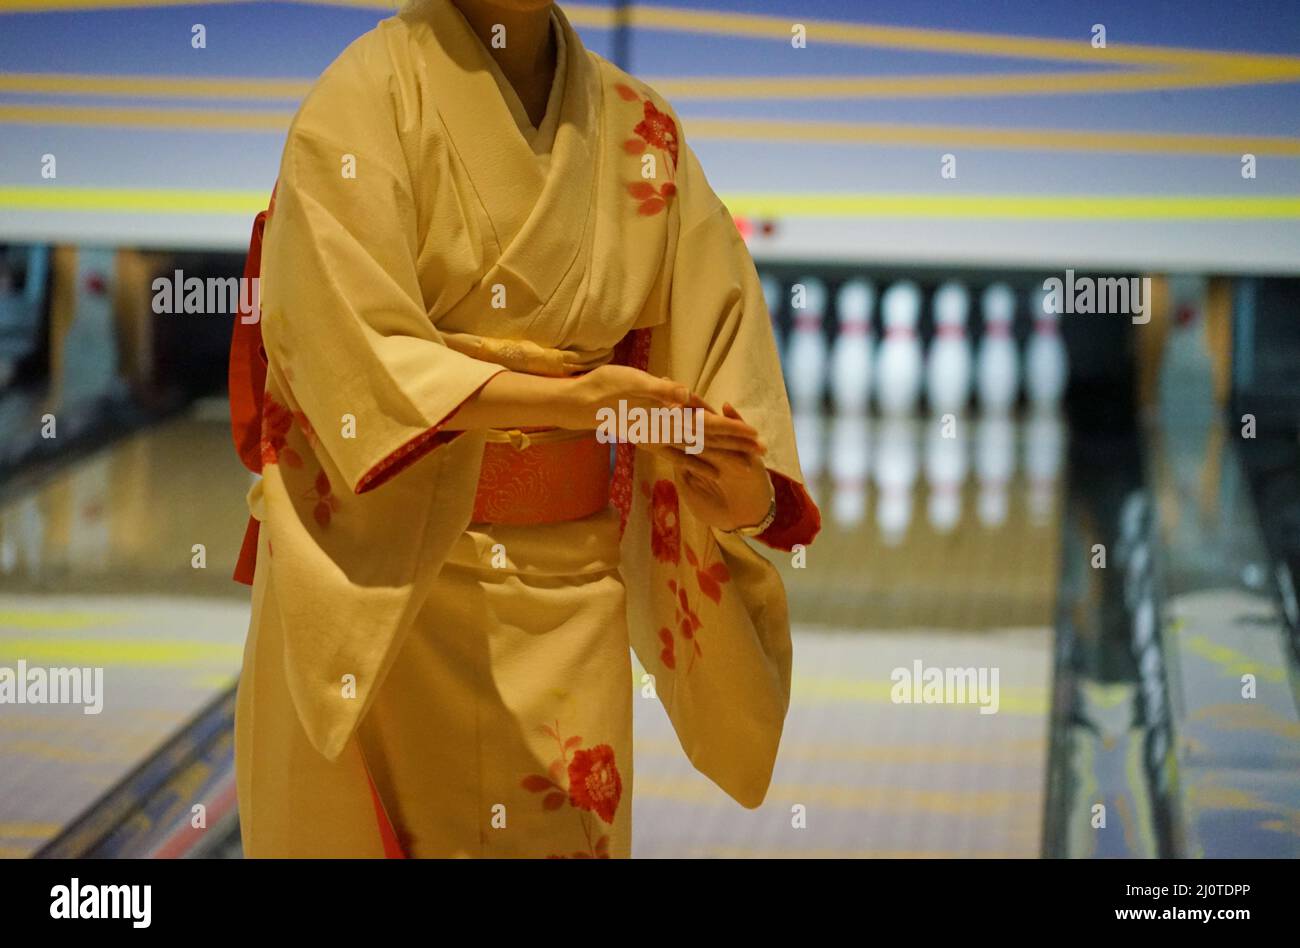 Bowling alley and a kimono Stock Photo